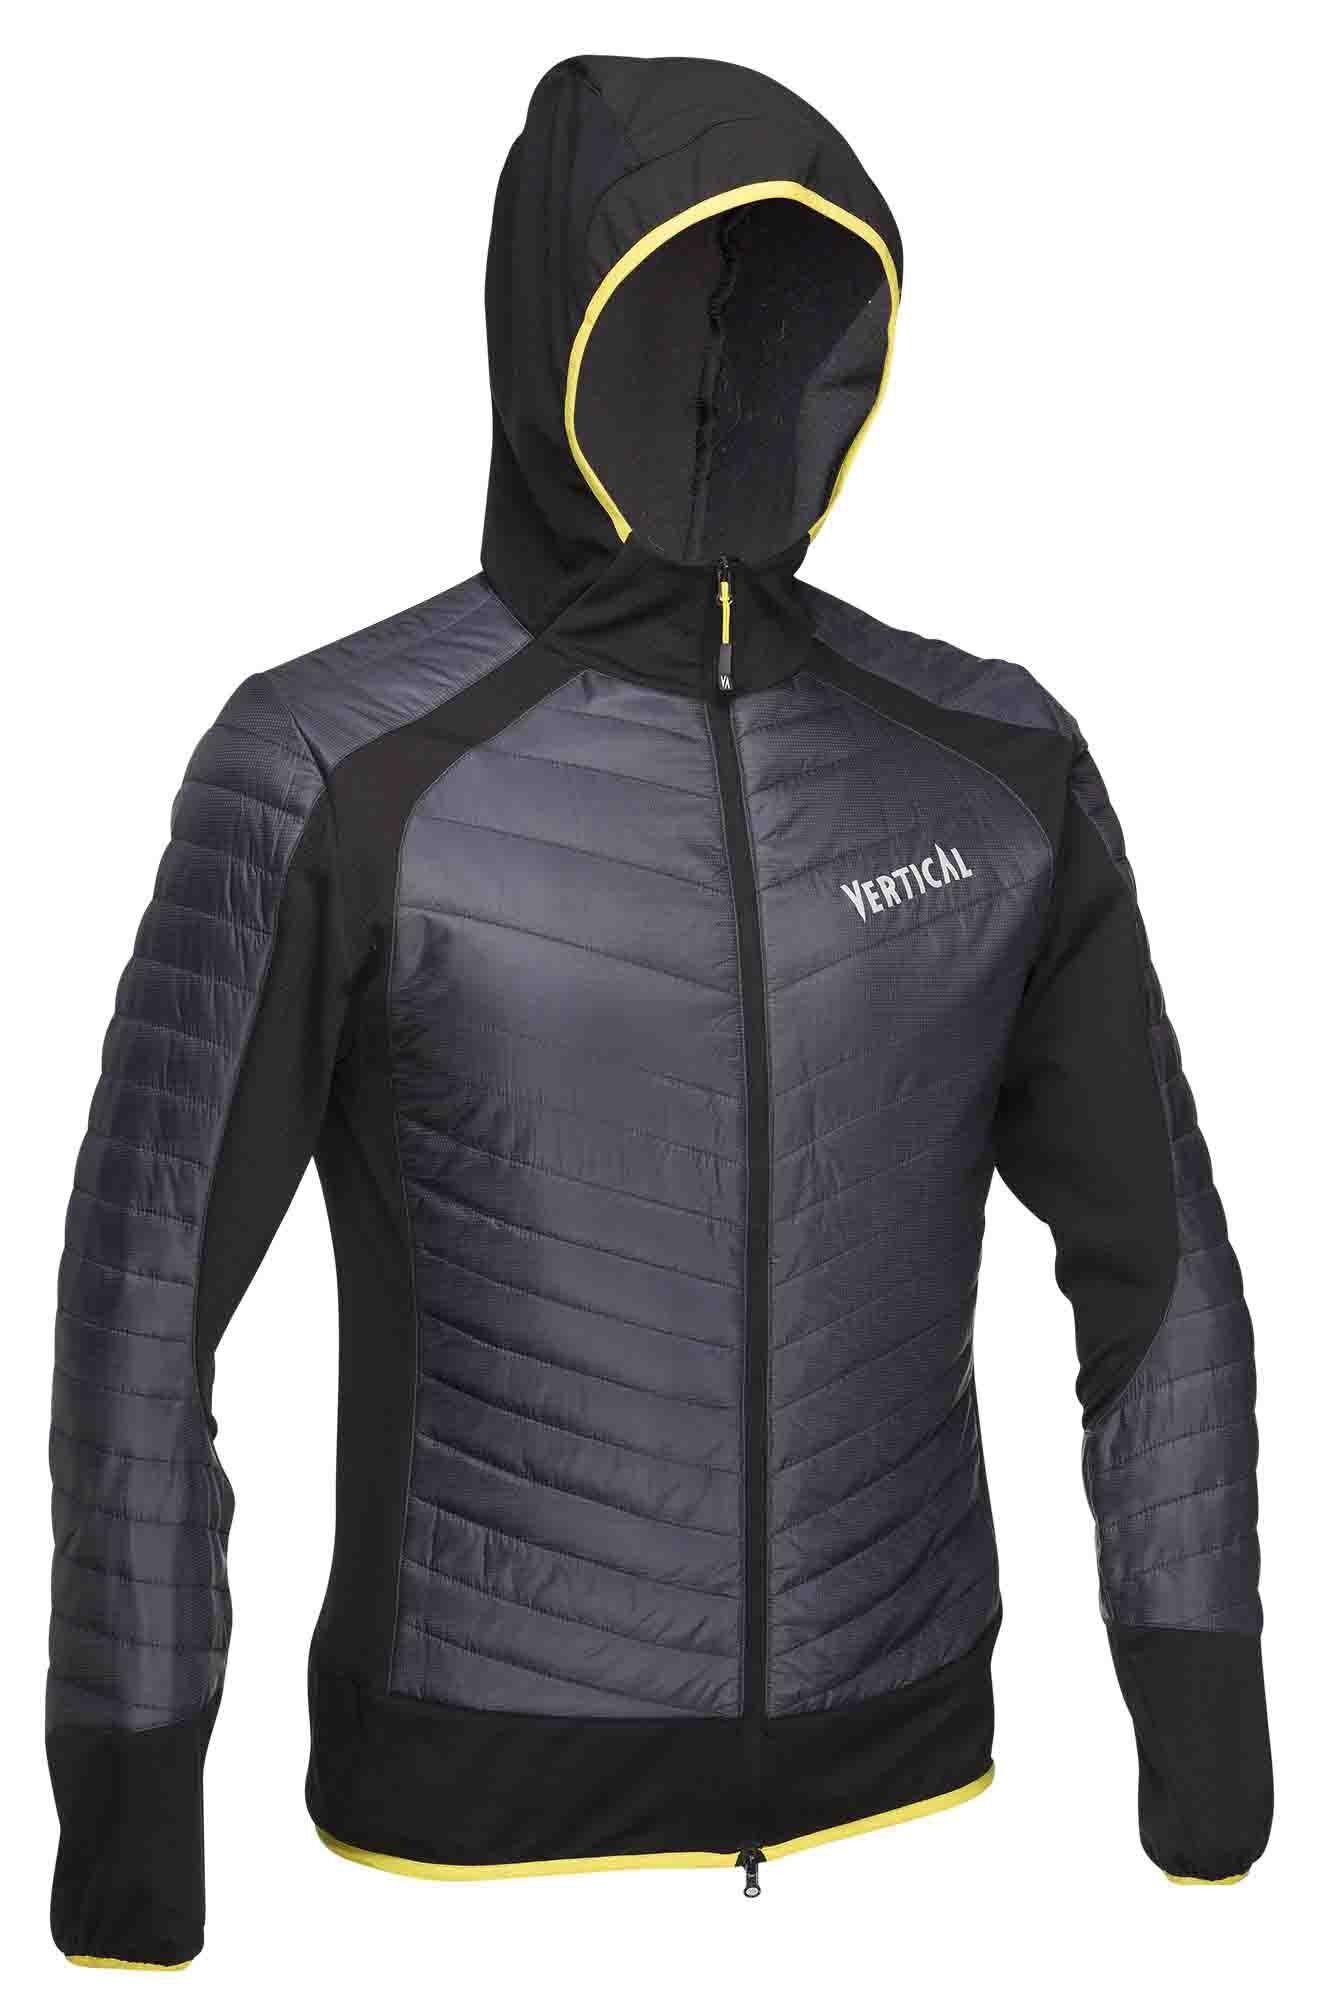 Vertical Aeroquest Hybrid Jacket - Insulated jacket - Men's